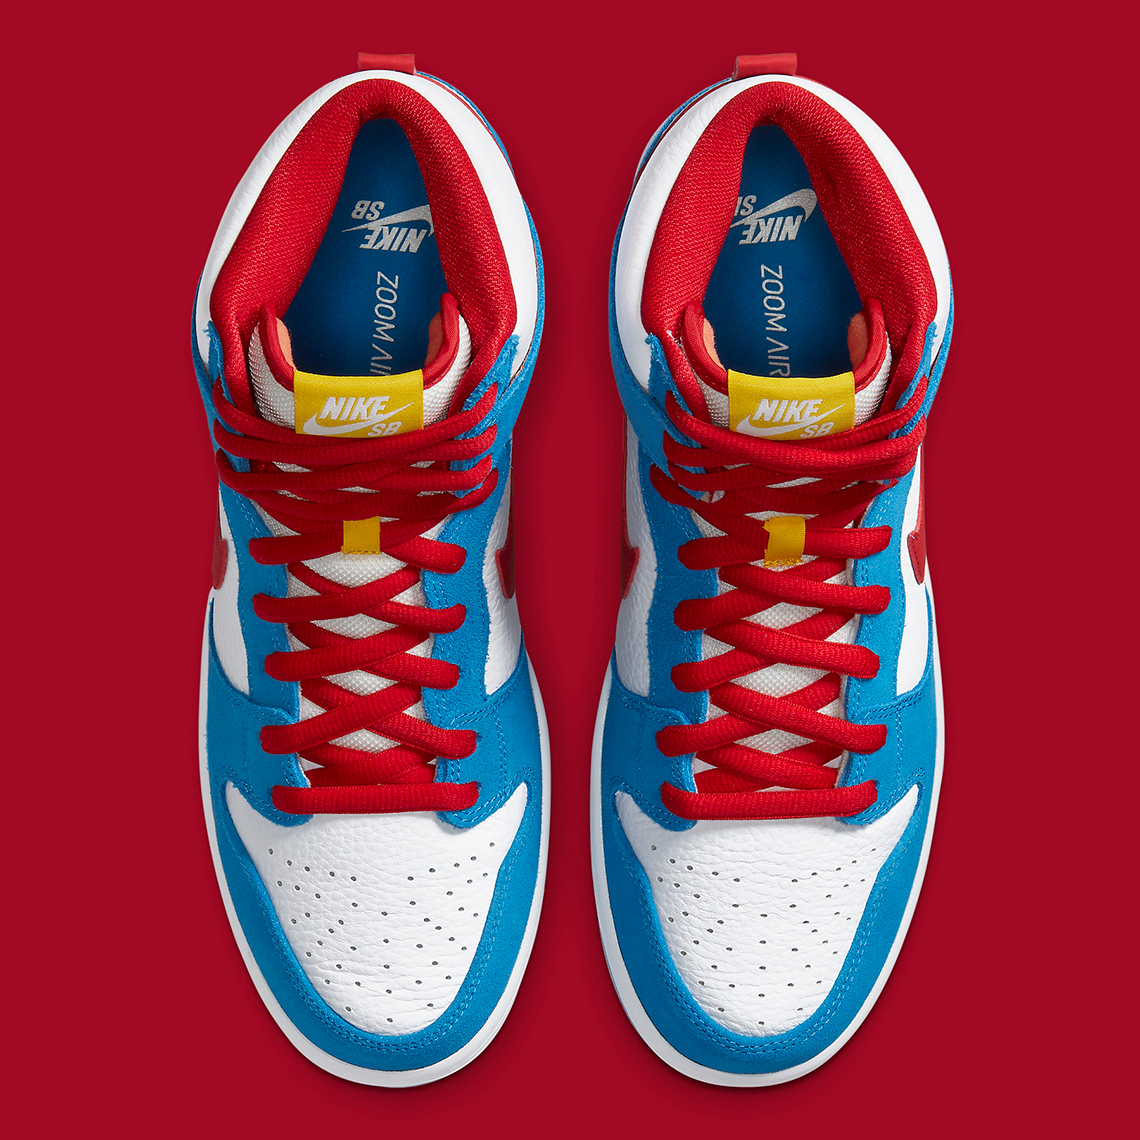 Oh Man Look At Nike’s ‘Doraemon’ Dunks